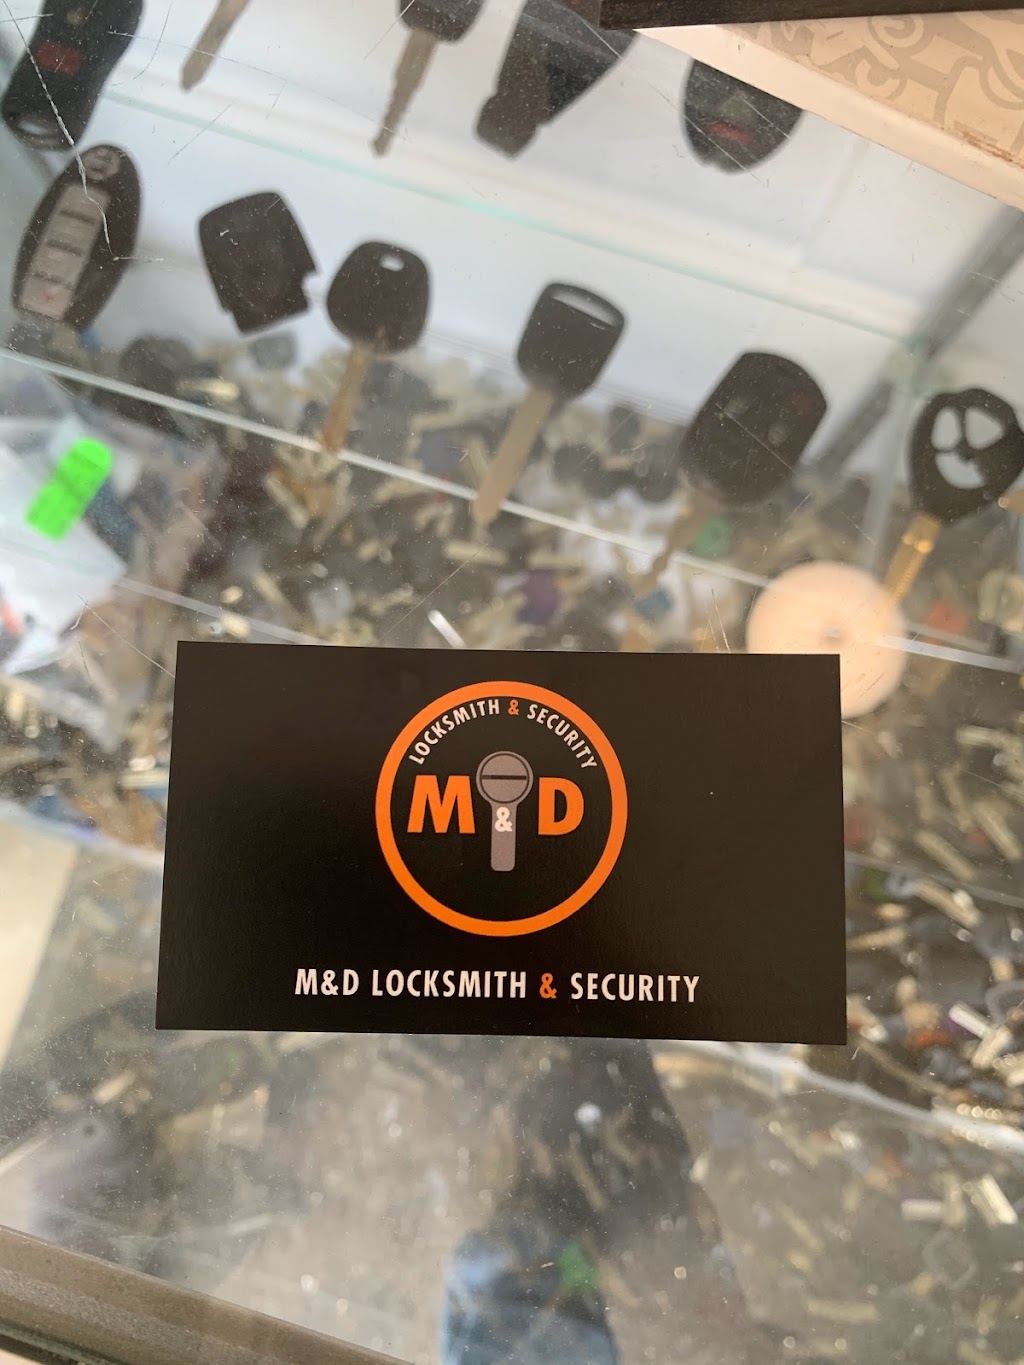 M&D Locksmith and Security | 1141 St Johns Pl, Brooklyn, NY 11213 | Phone: (929) 296-4111